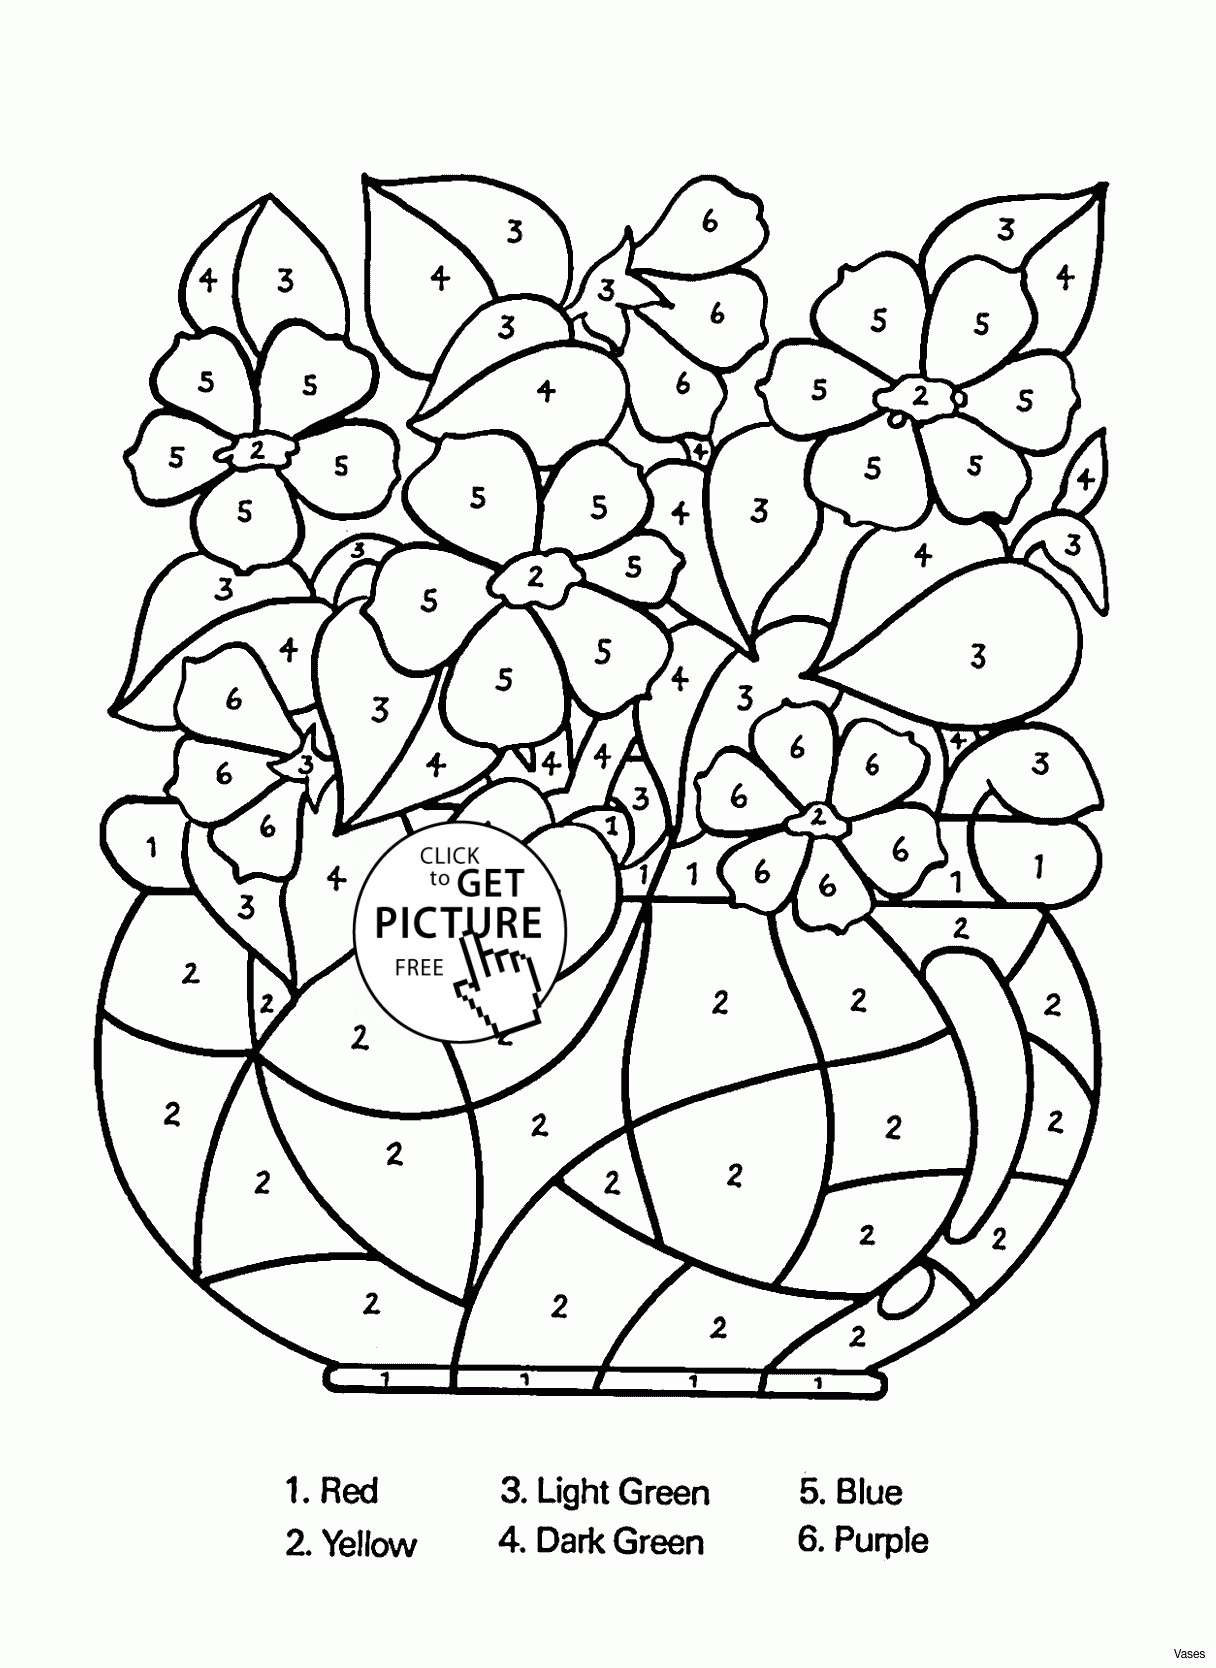 24 Stylish Light Bulb Vase 2024 free download light bulb vase of lighting strikes clipart elegant menu clipart fresh flower vase in published september 4 2018 at 1216 ac297 1668 in new lighting strikes clipart